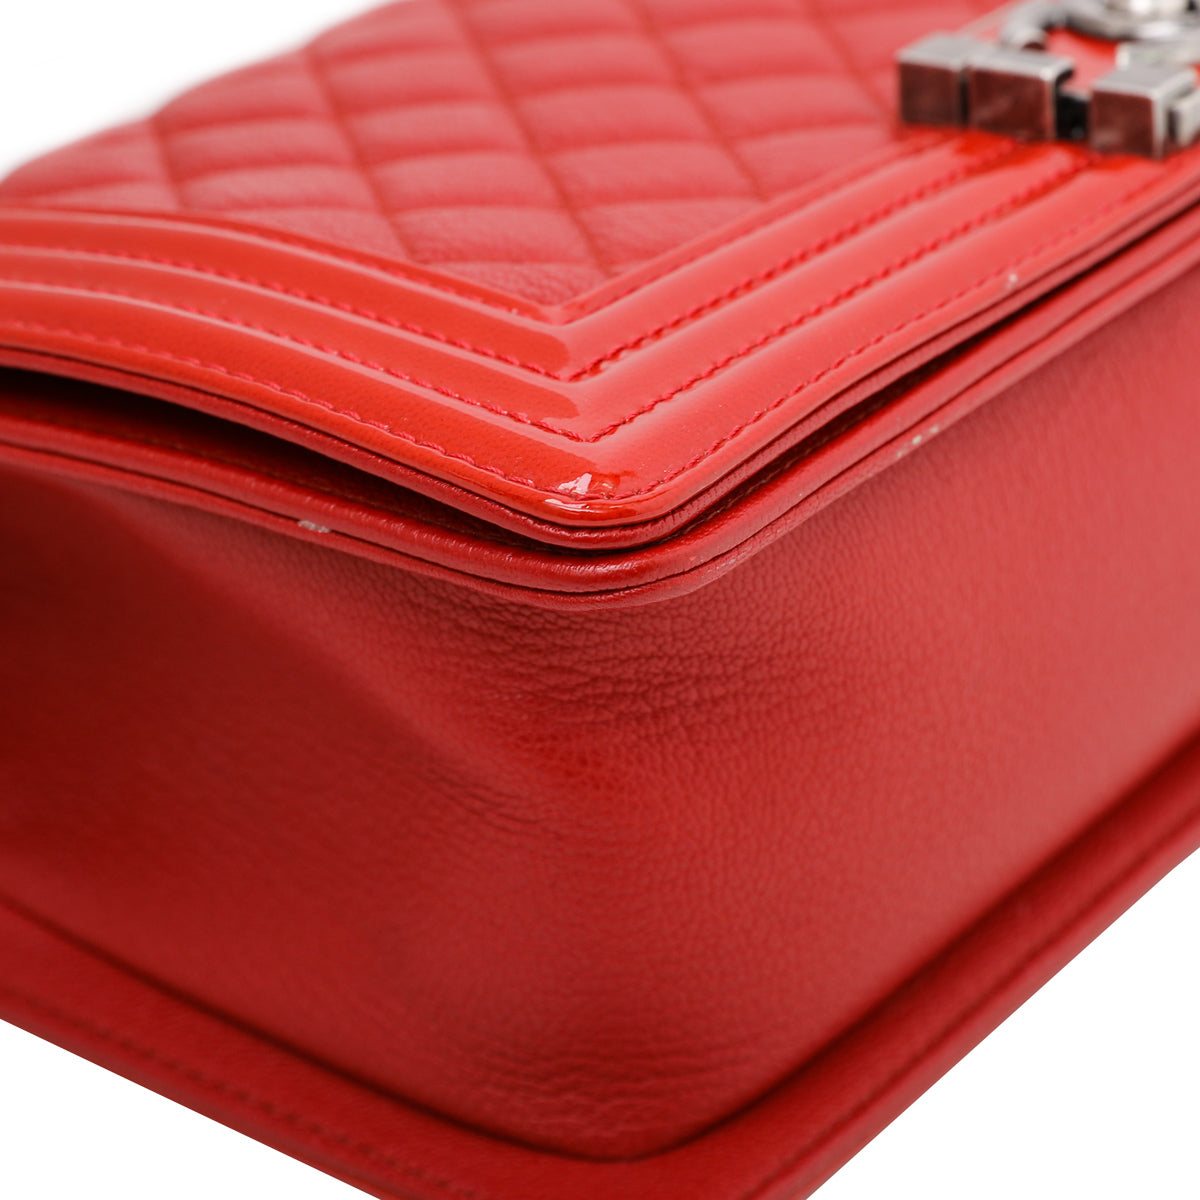 Chanel Red Le Boy Bag